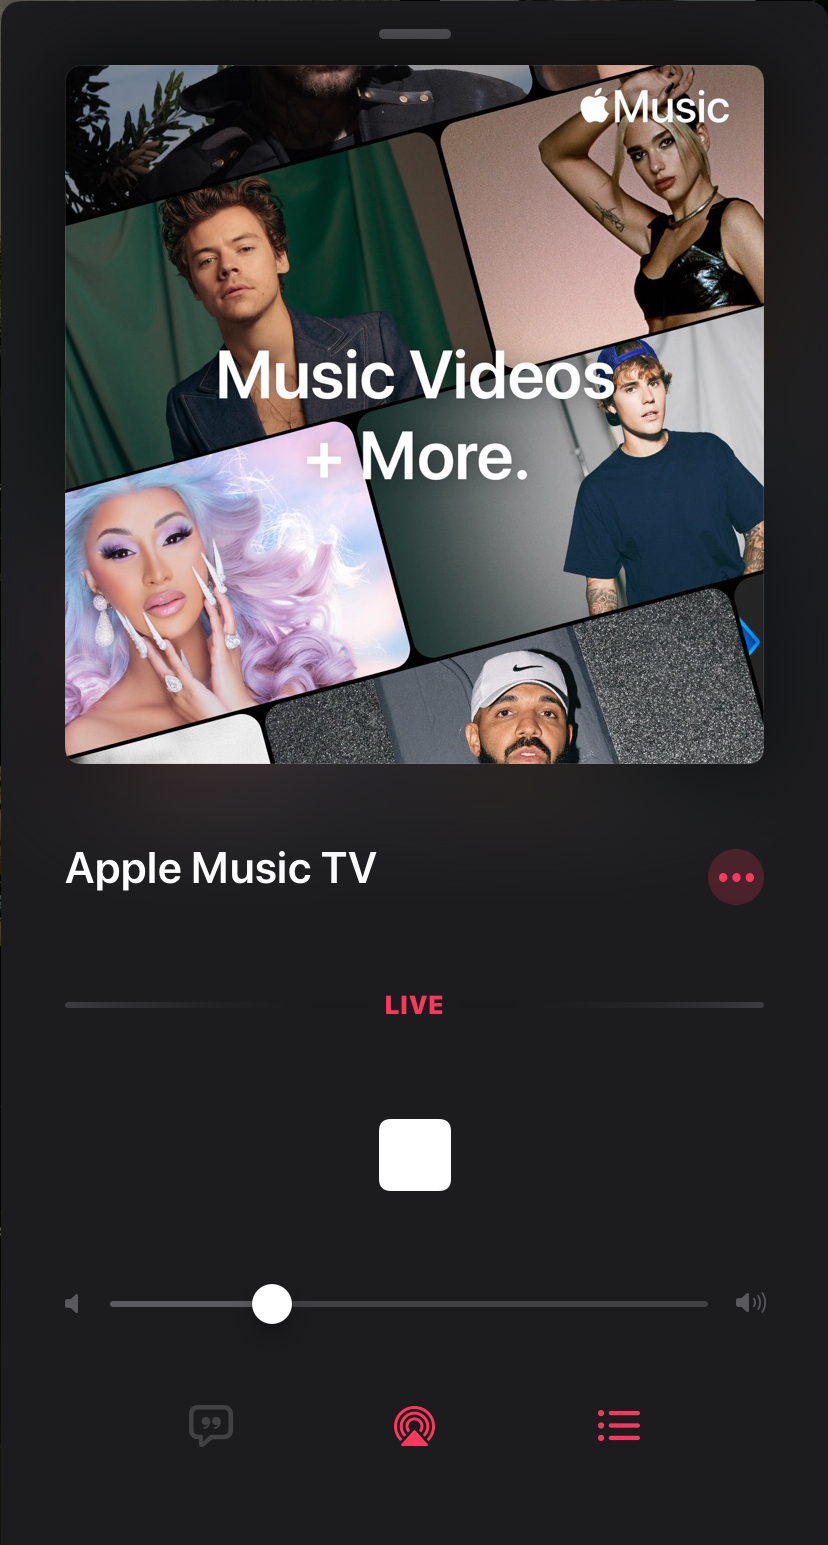 Apple Music TV channel in the Apple Music app on iPad (Screenshot: Brendan Hesse)